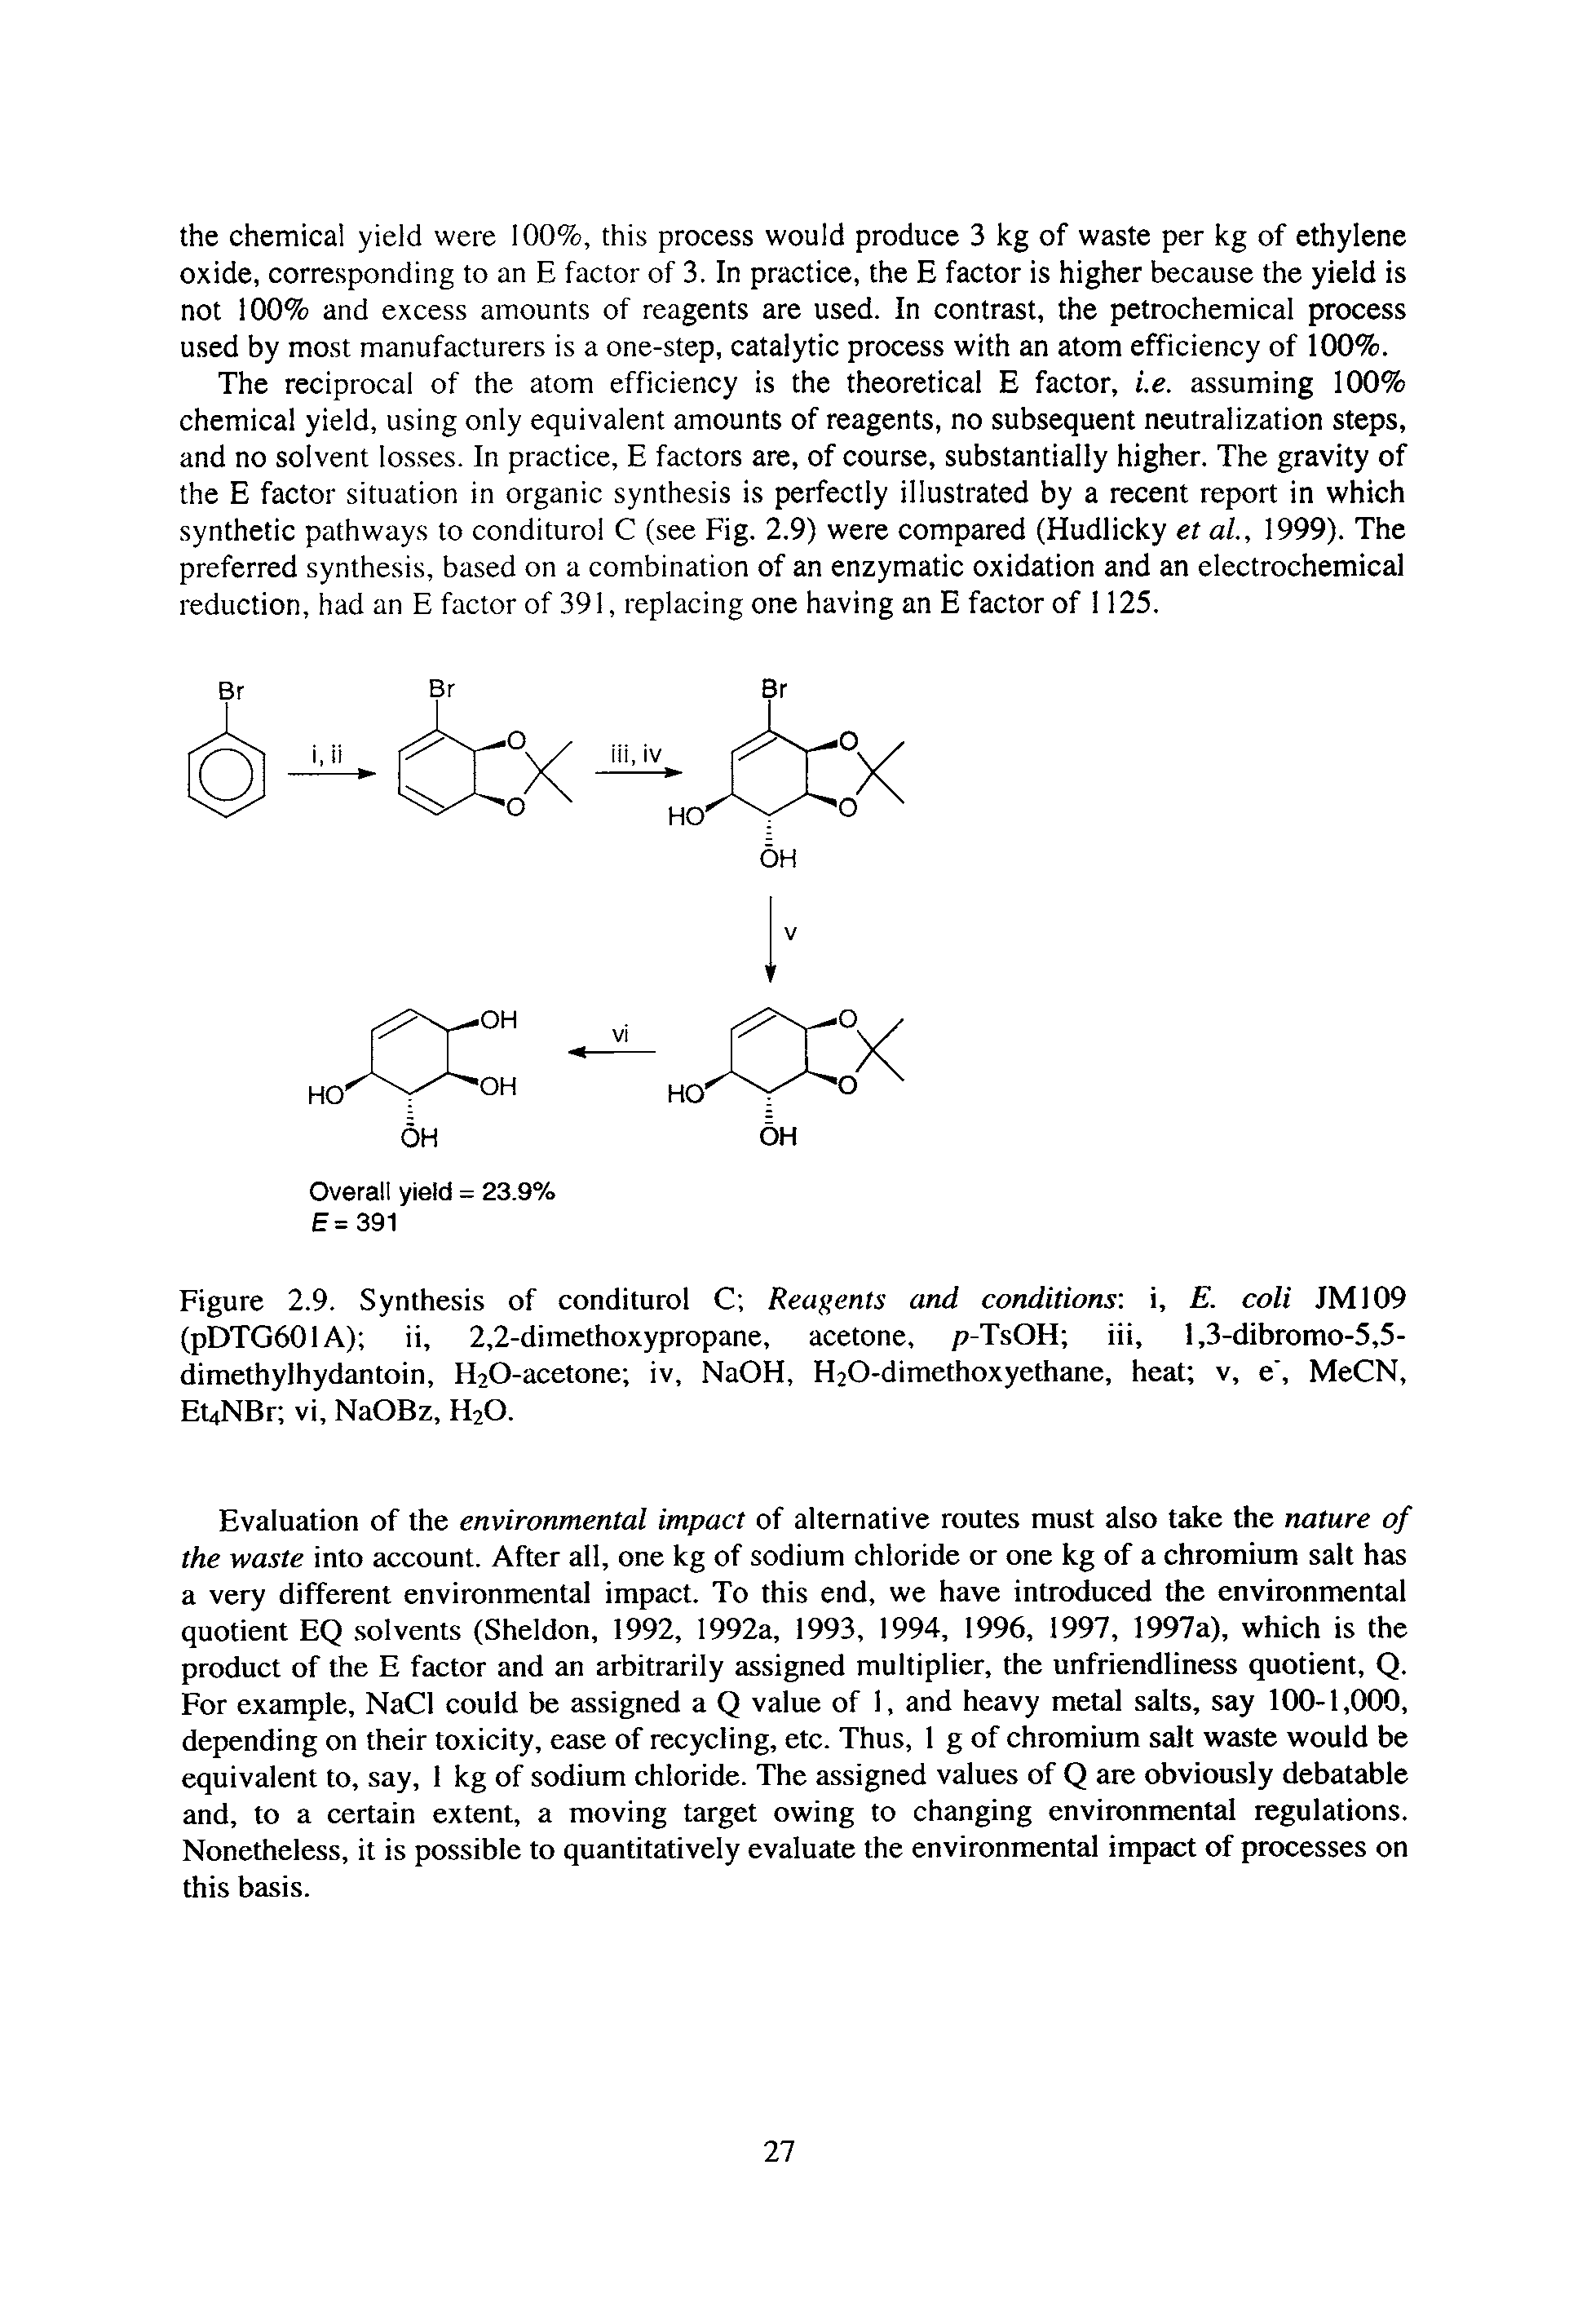 Figure 2.9. Synthesis of conditurol C Reagents and conditions i, E. coli JM109 (pDTGbOIA) ii, 2,2-dimethoxypropane, acetone, / -TsOH iii, 1,3-dibromo-5,5-dimethylhydantoin, H20-acetone iv, NaOH, H20-dimethoxyethane, heat v, e, MeCN, Et4NBr vi, NaOBz, H2O.